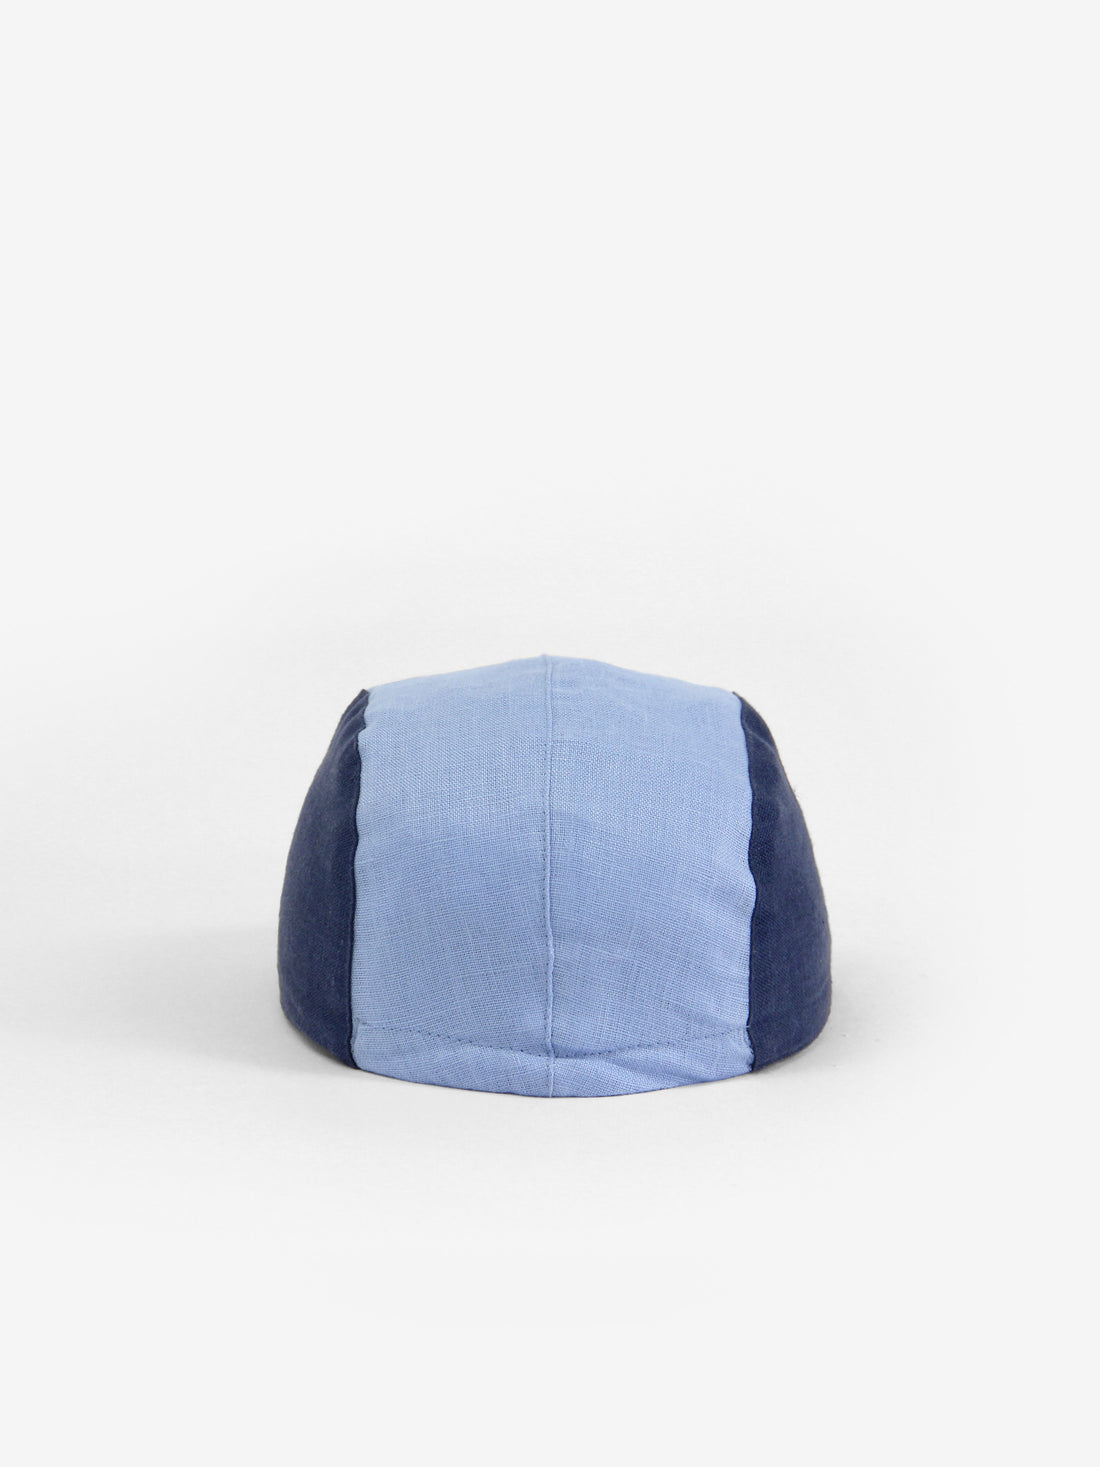 Linen cap by Caribou, multicoloured